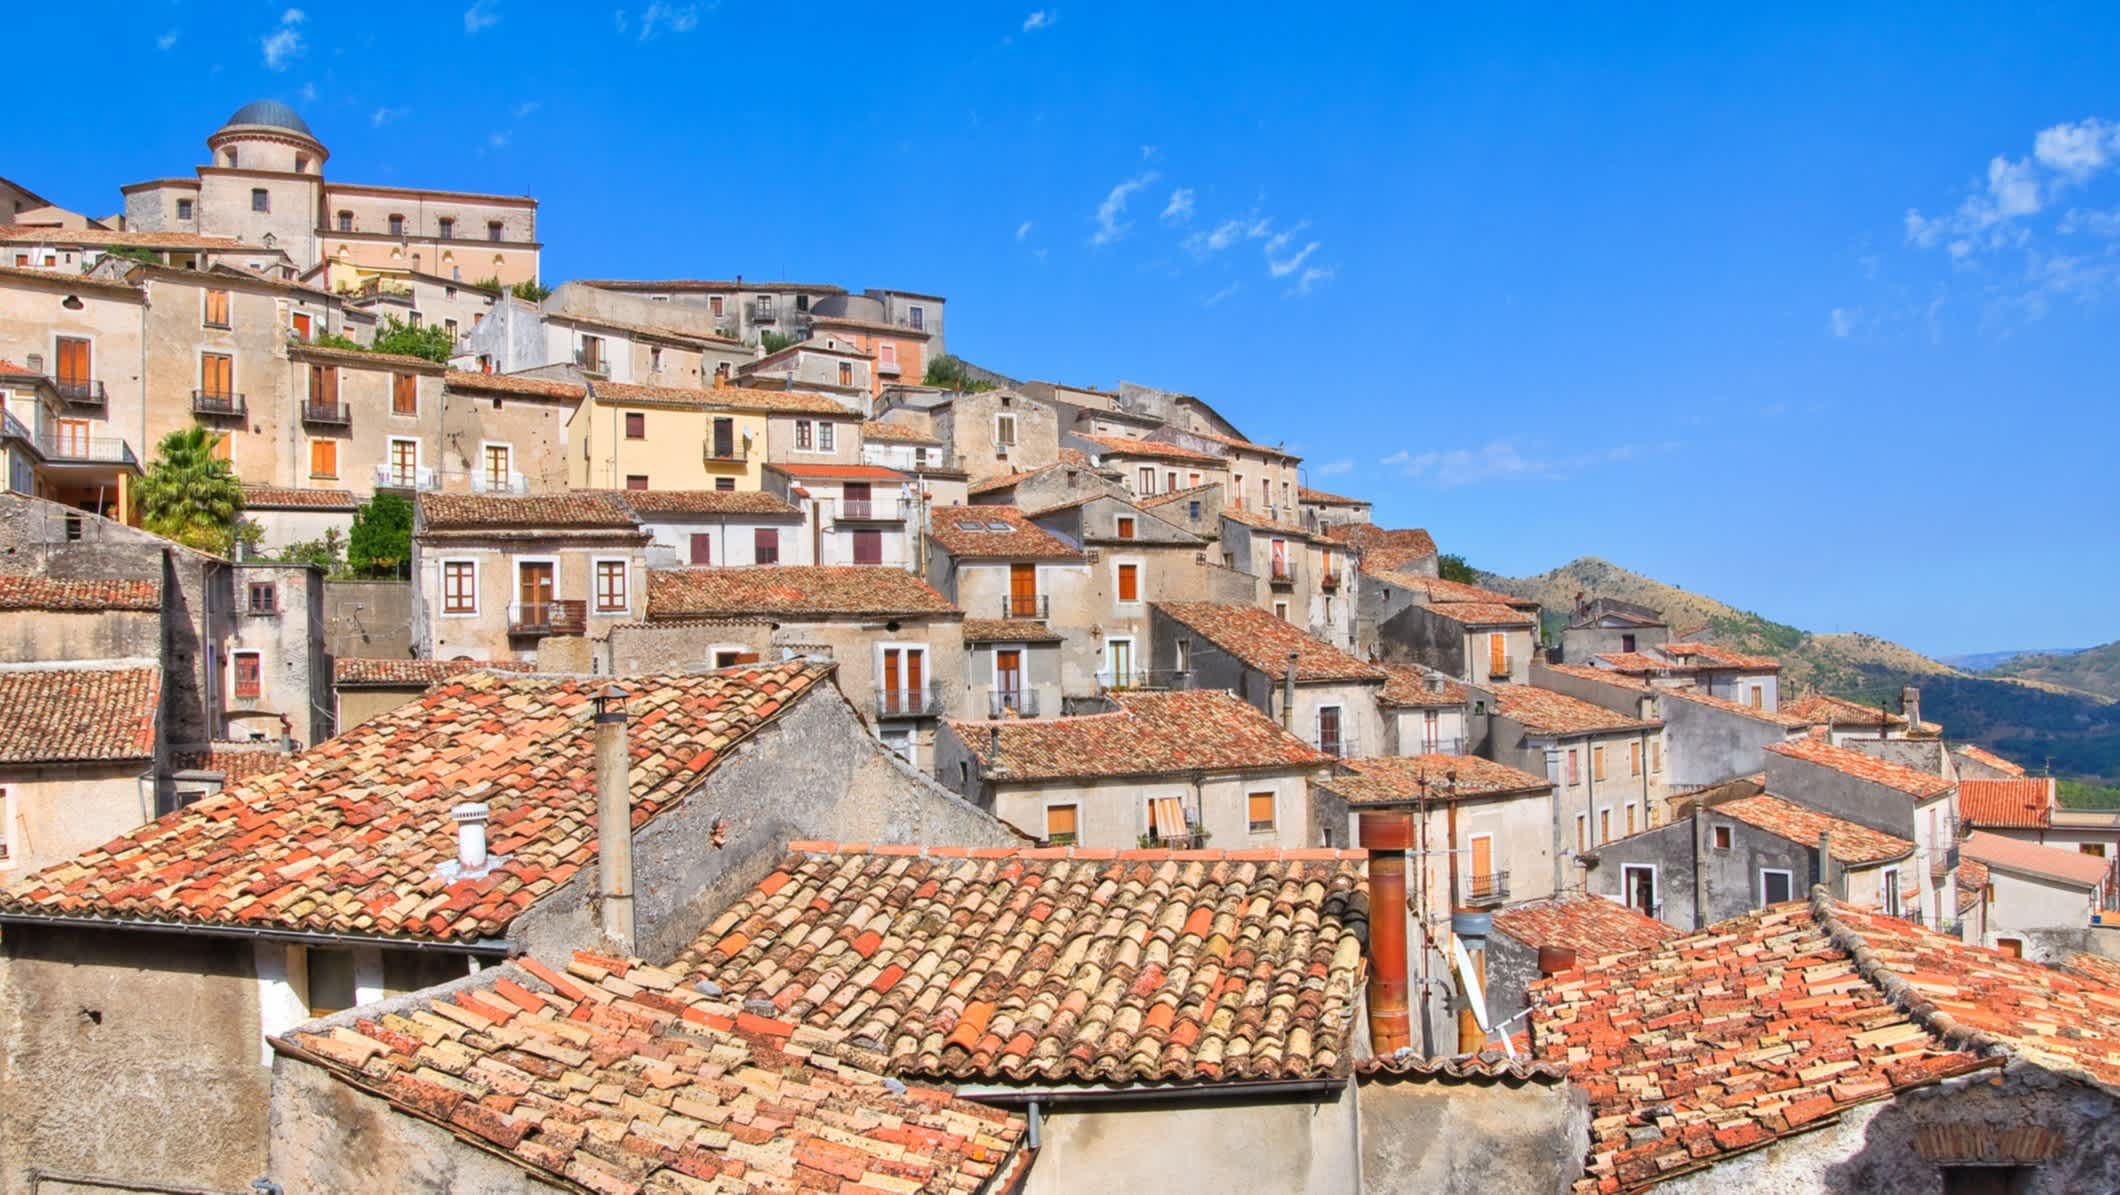 Vue panoramique de Morano Calabro, en Calabre, en Italie.